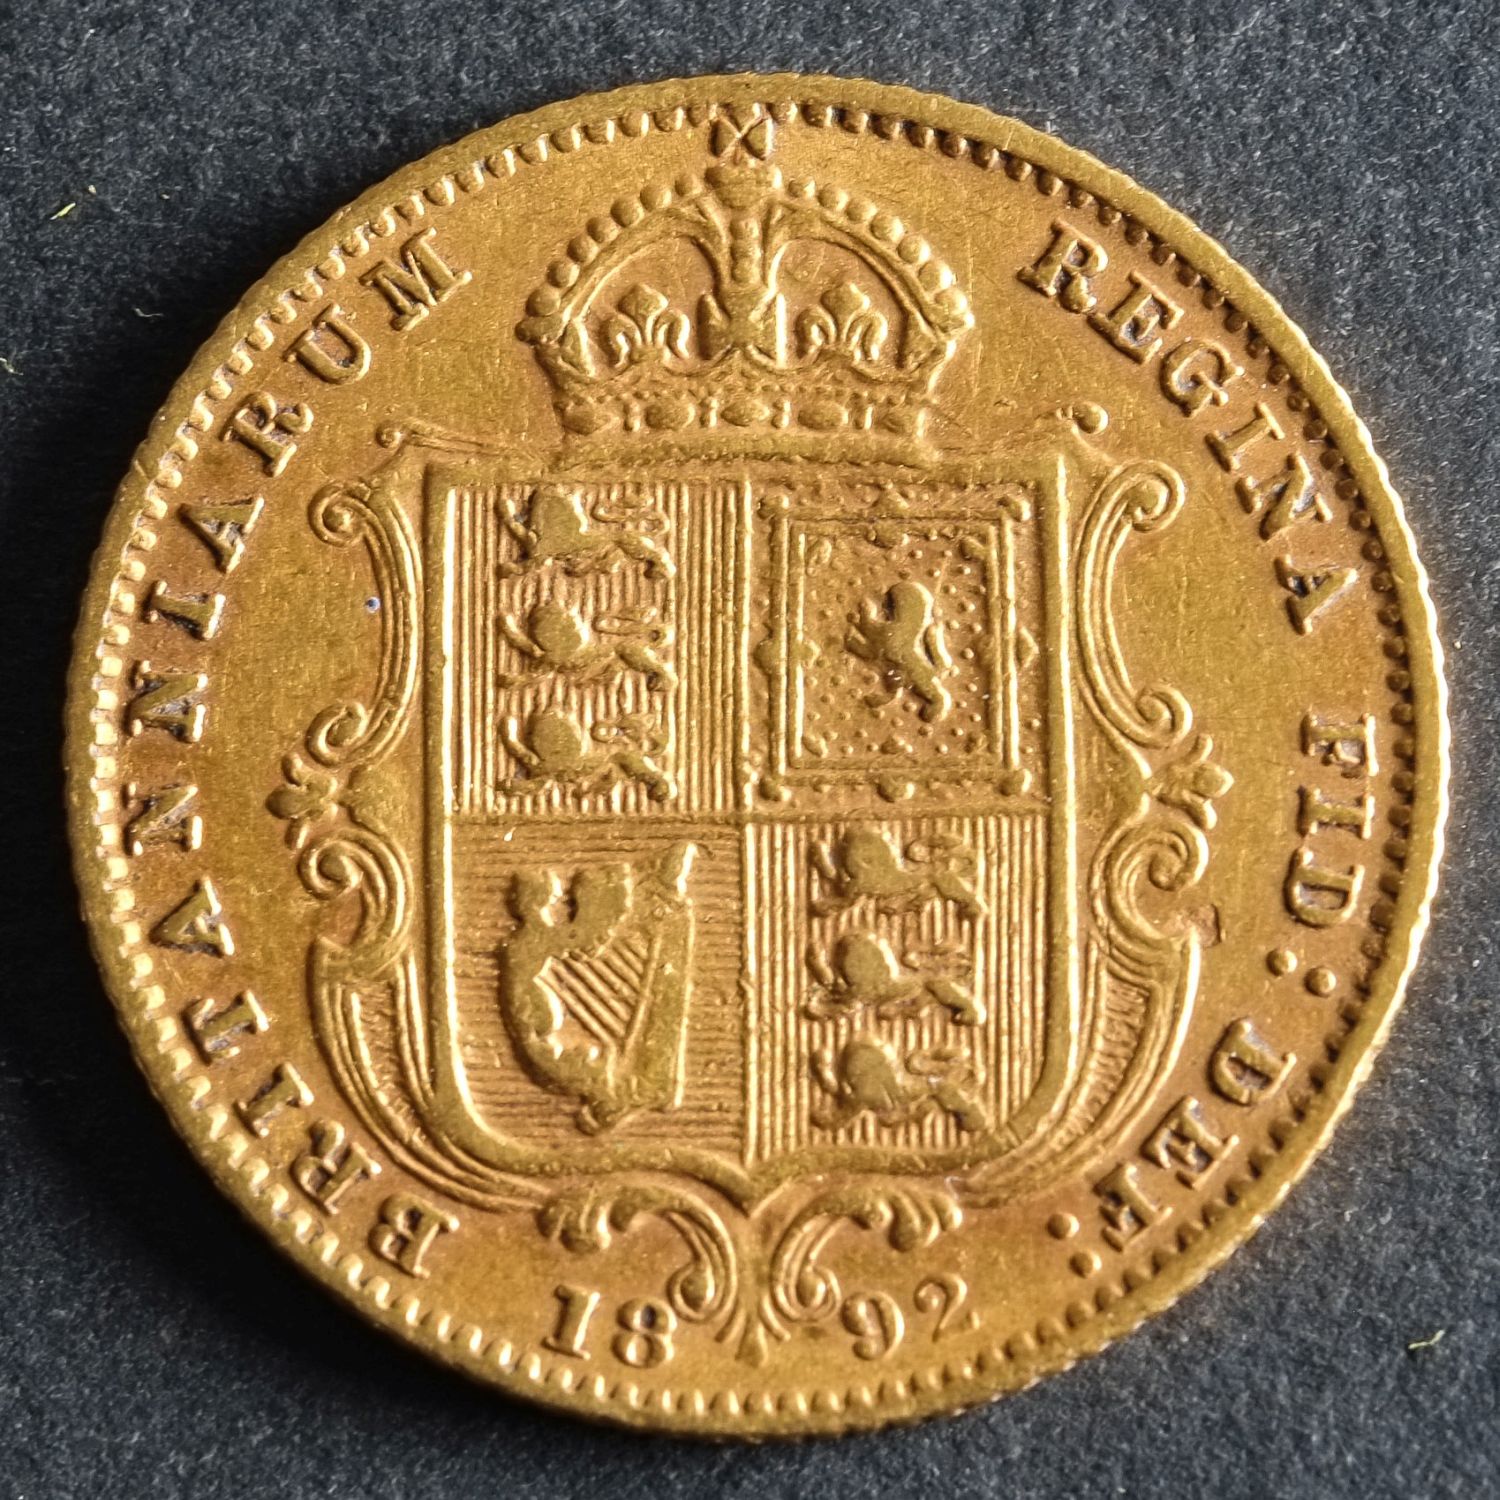 An 1892 Victorian half sovereign.